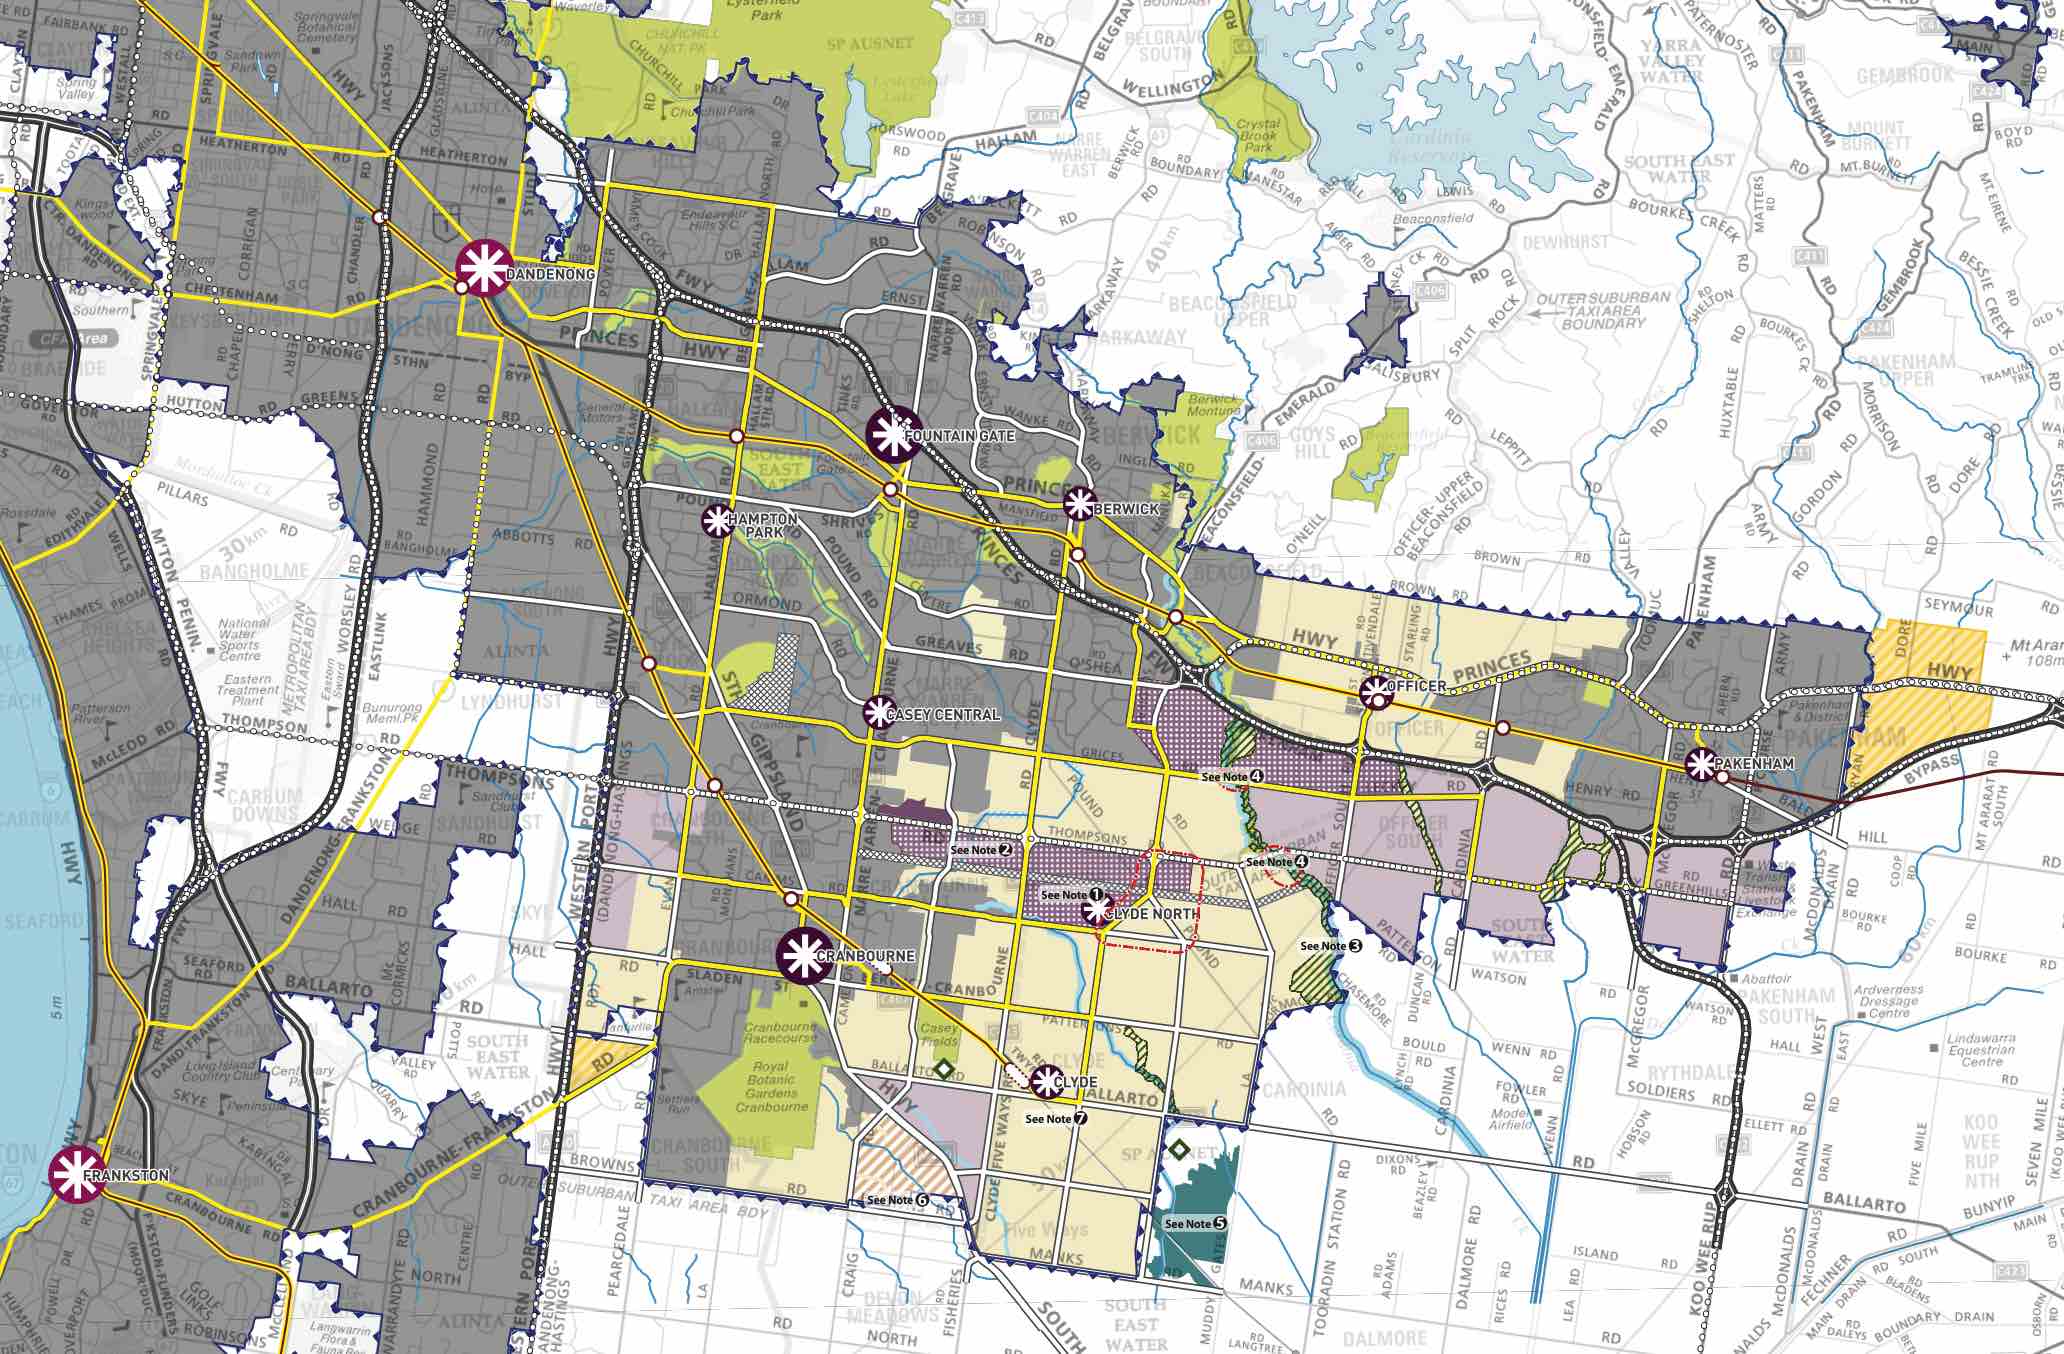 Melbourne South East Growth Corridor Community Concept Plan - vpa.vic.gov.au